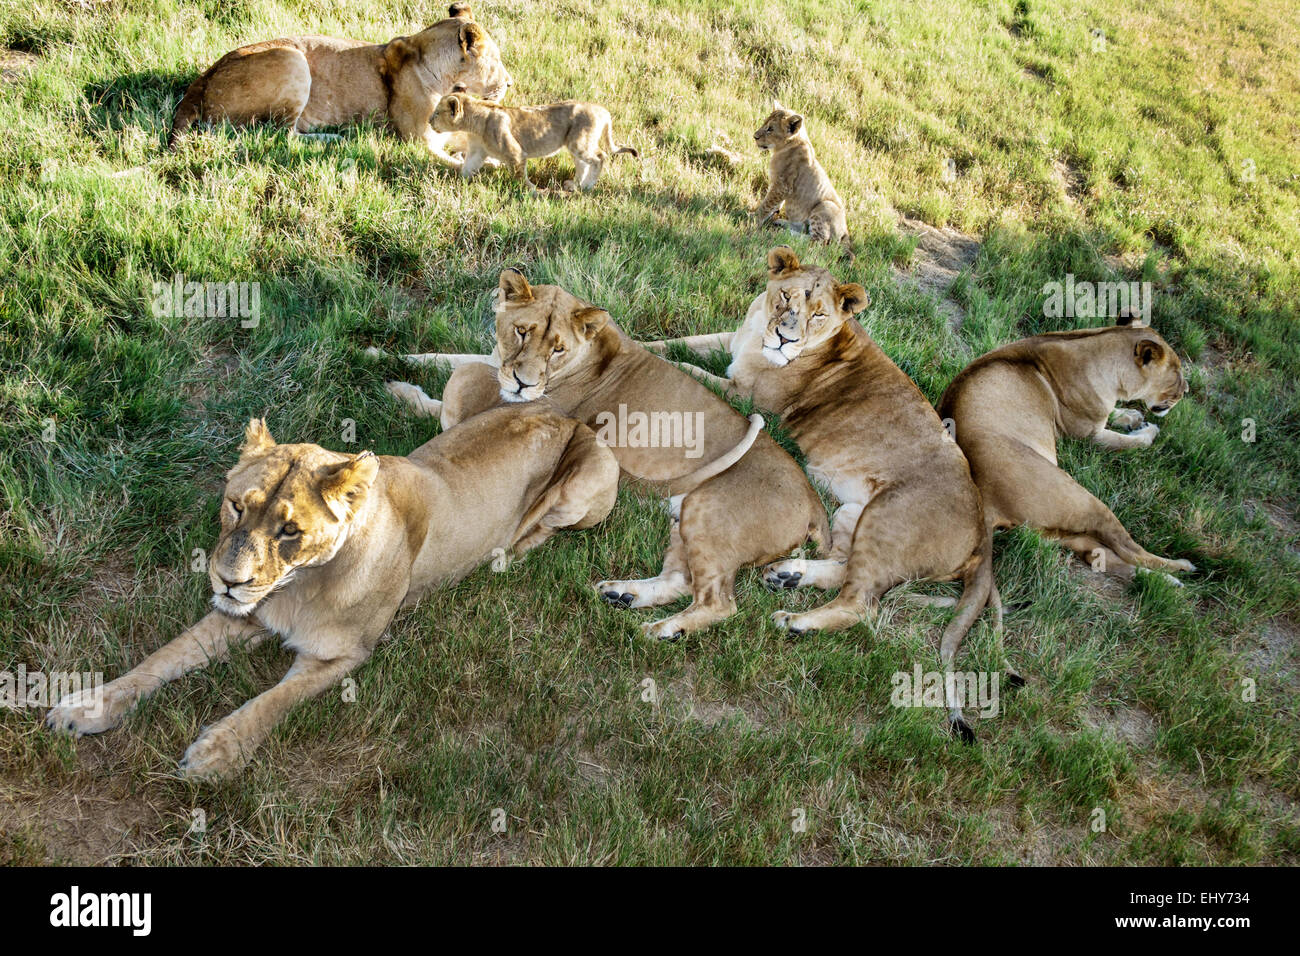 Johannesburg South Africa,Lion Park,wildlife conservation,lions,females,cubs,SAfri150304085 Stock Photo